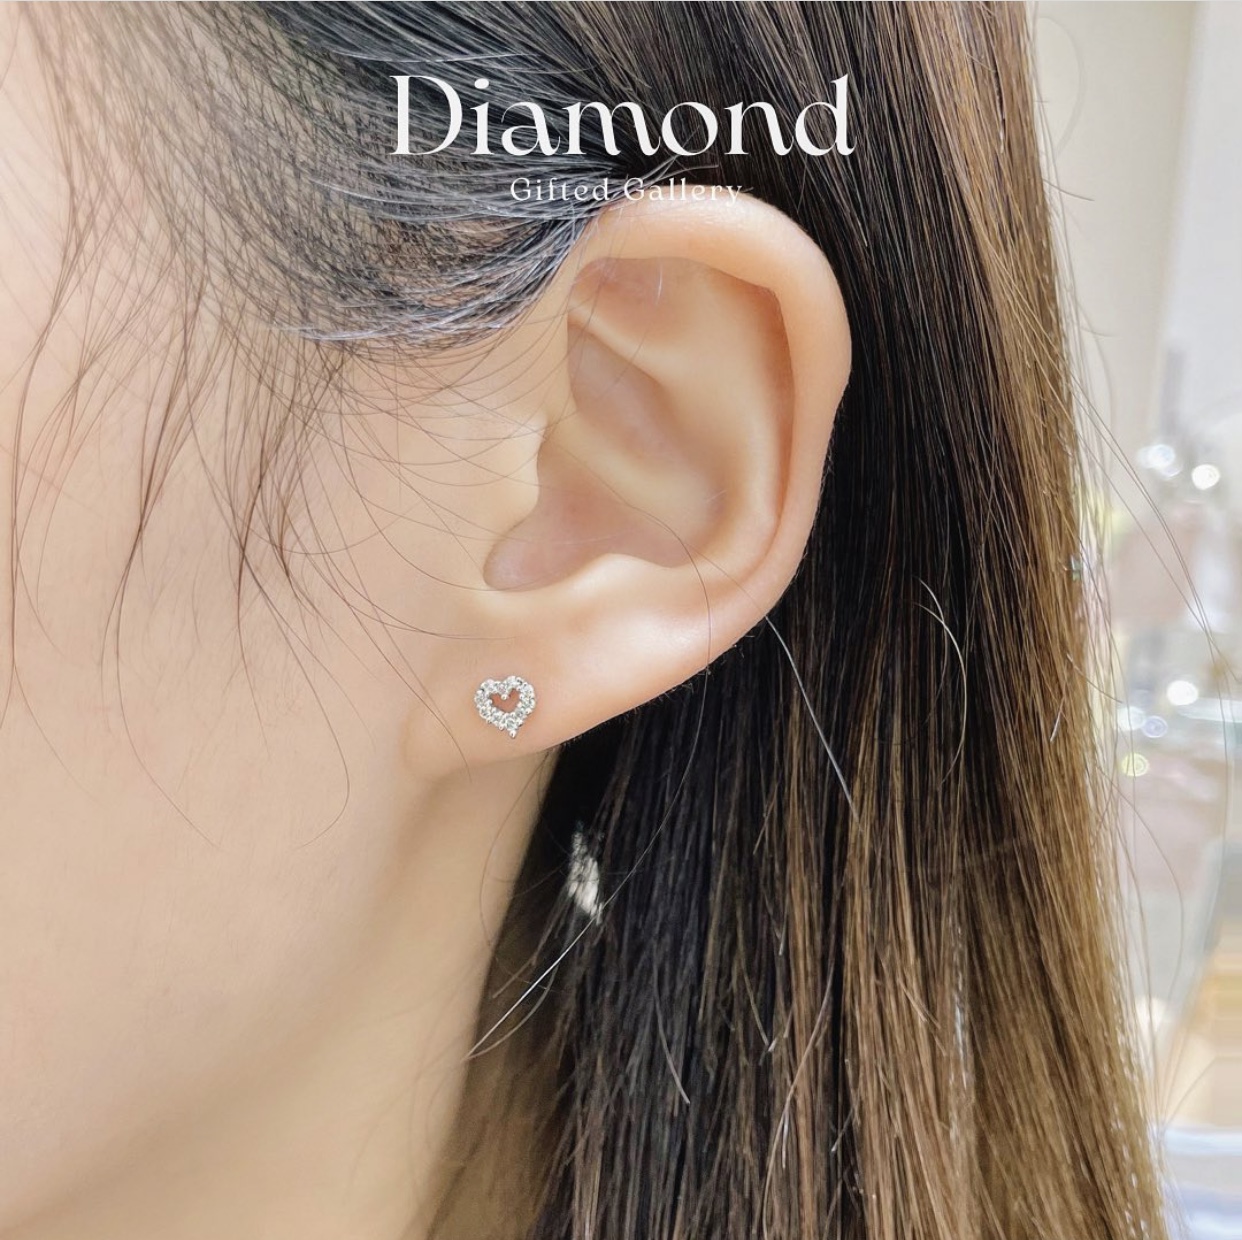 Diamond Earrings By Gifted Gallery